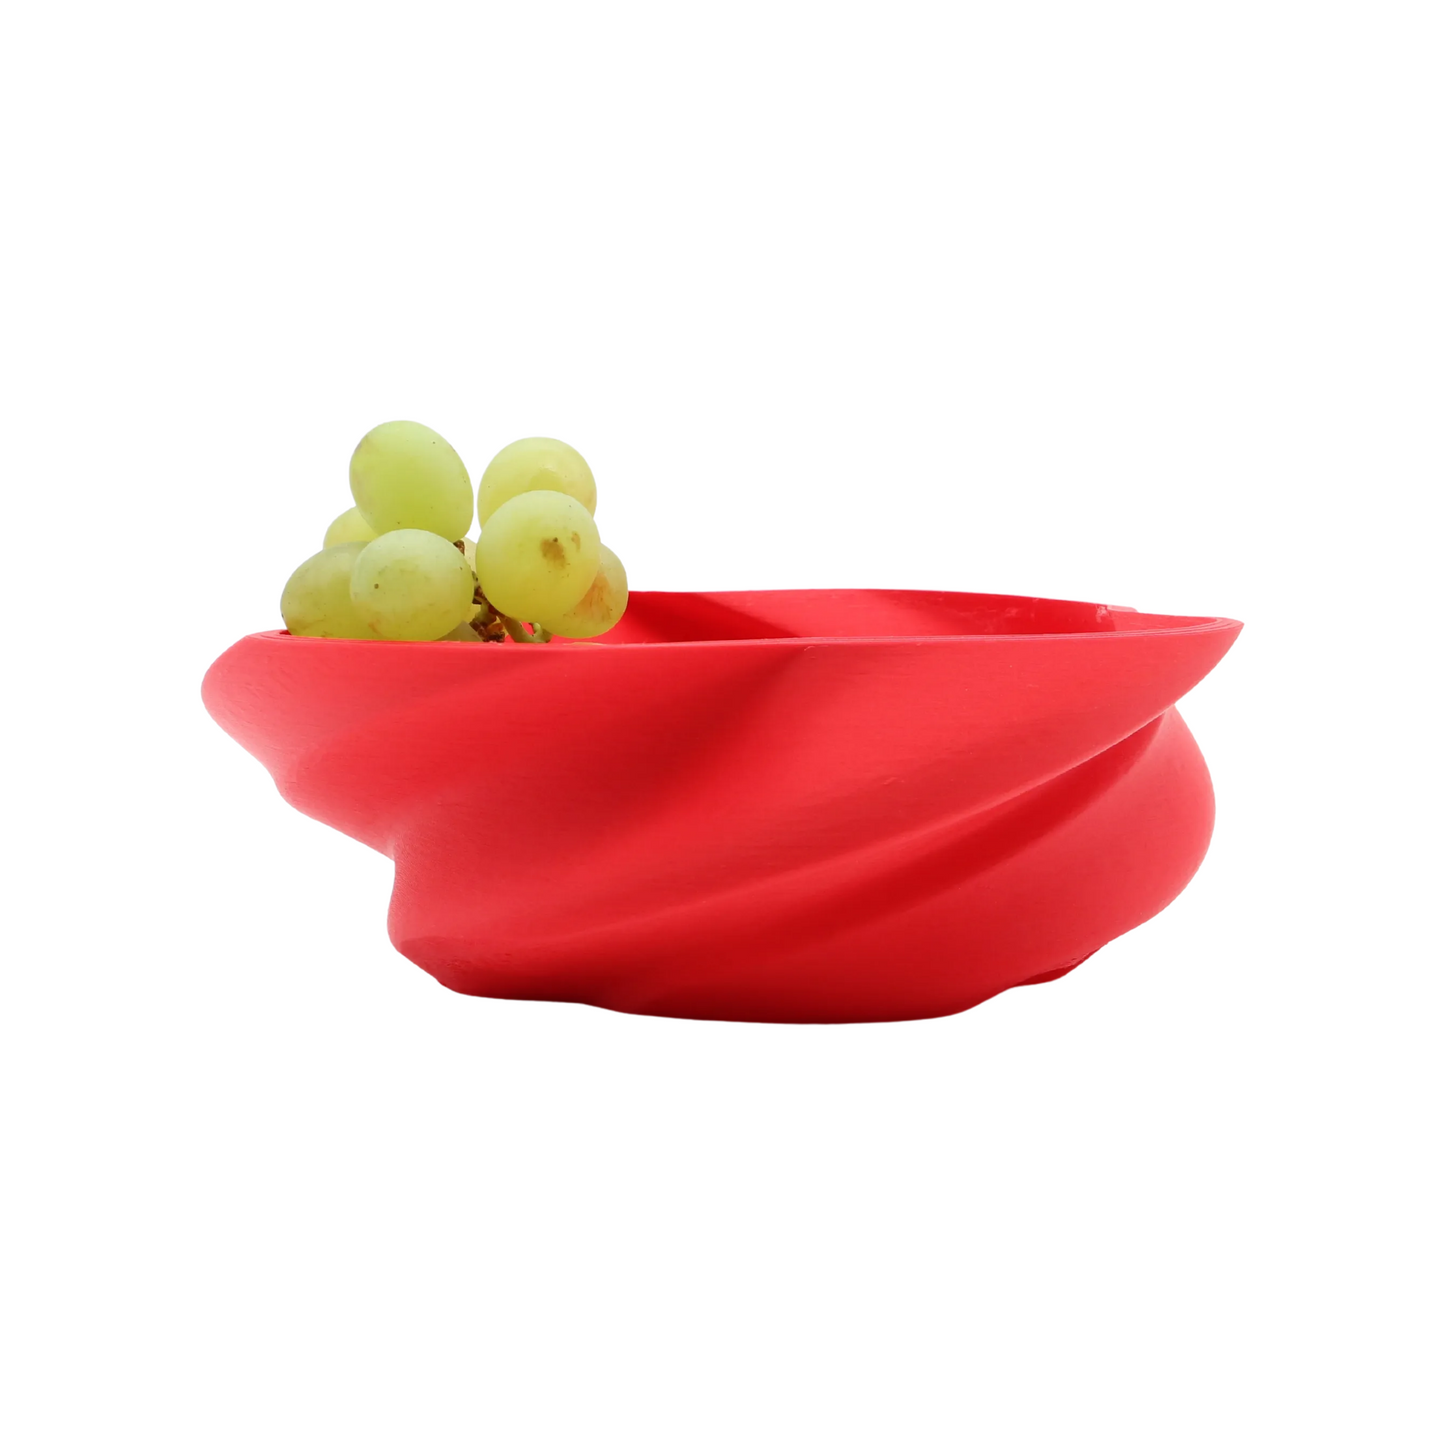 Macerata design fruit bowl red edition